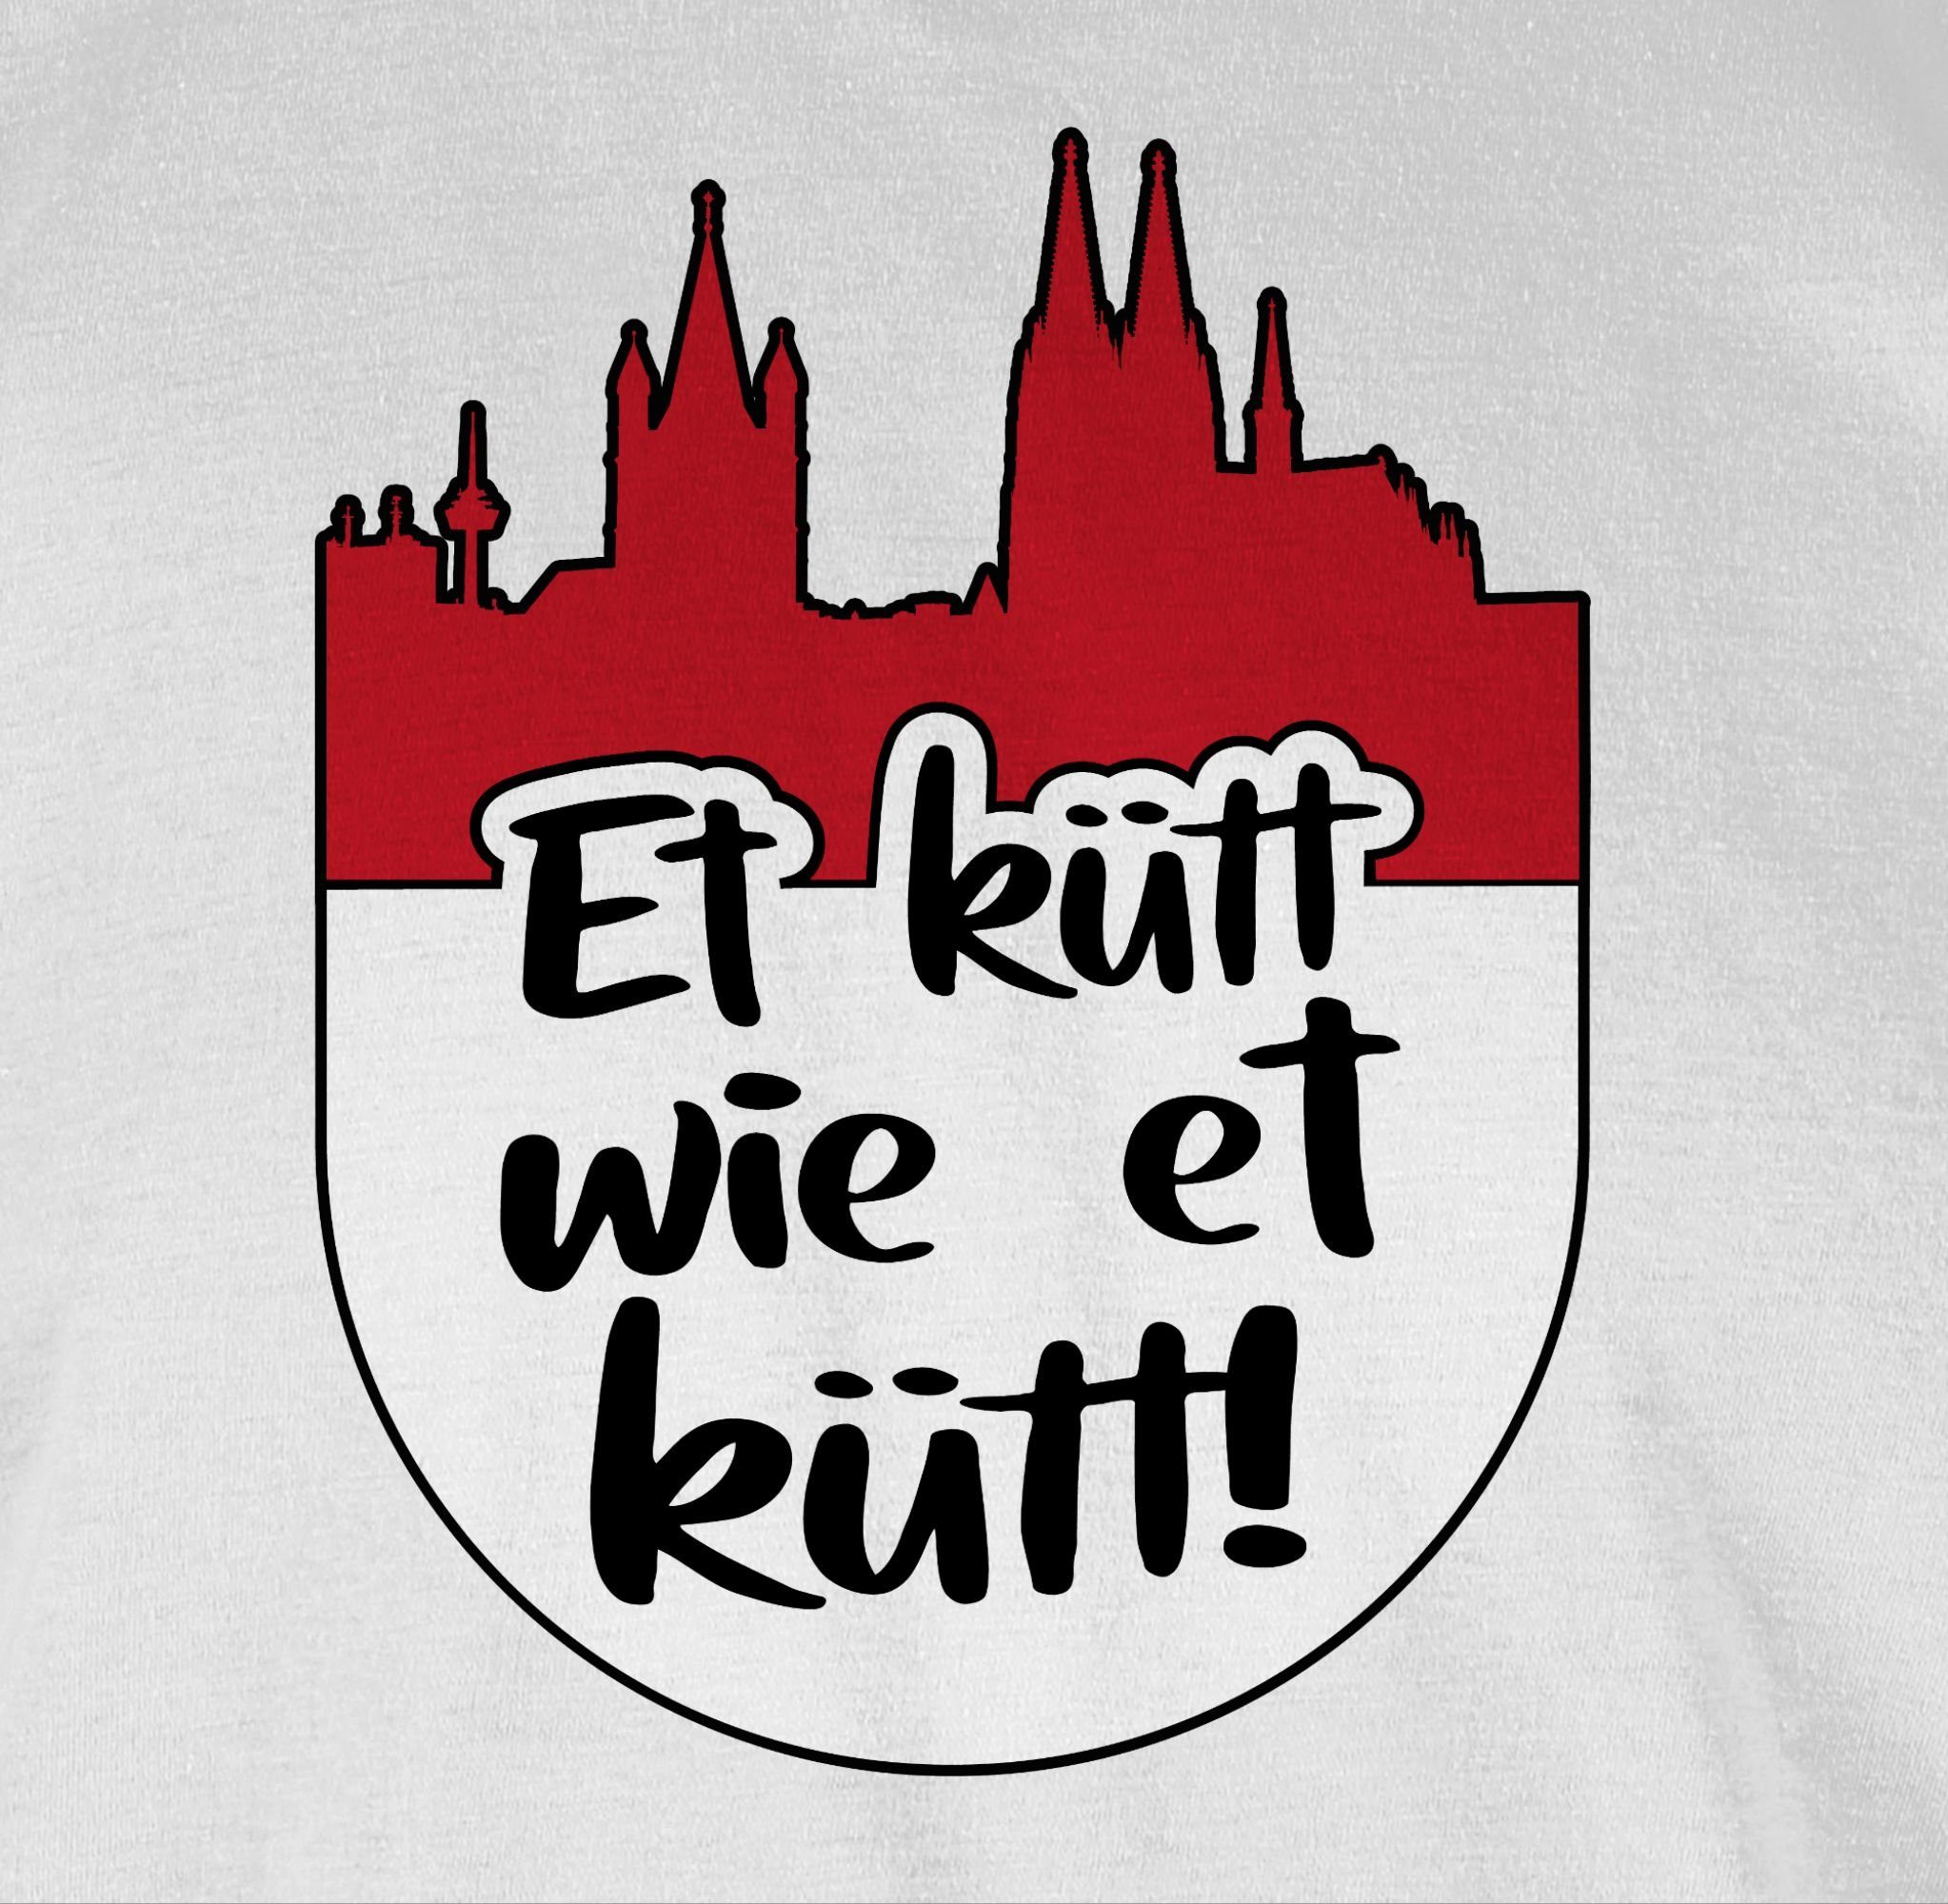 Kölner - 2 et Kölsch Grundgesetz kütt! rot T-Shirt Karneval Outfit kütt weiß Shirtracer Weiß Et wie Köln Echte